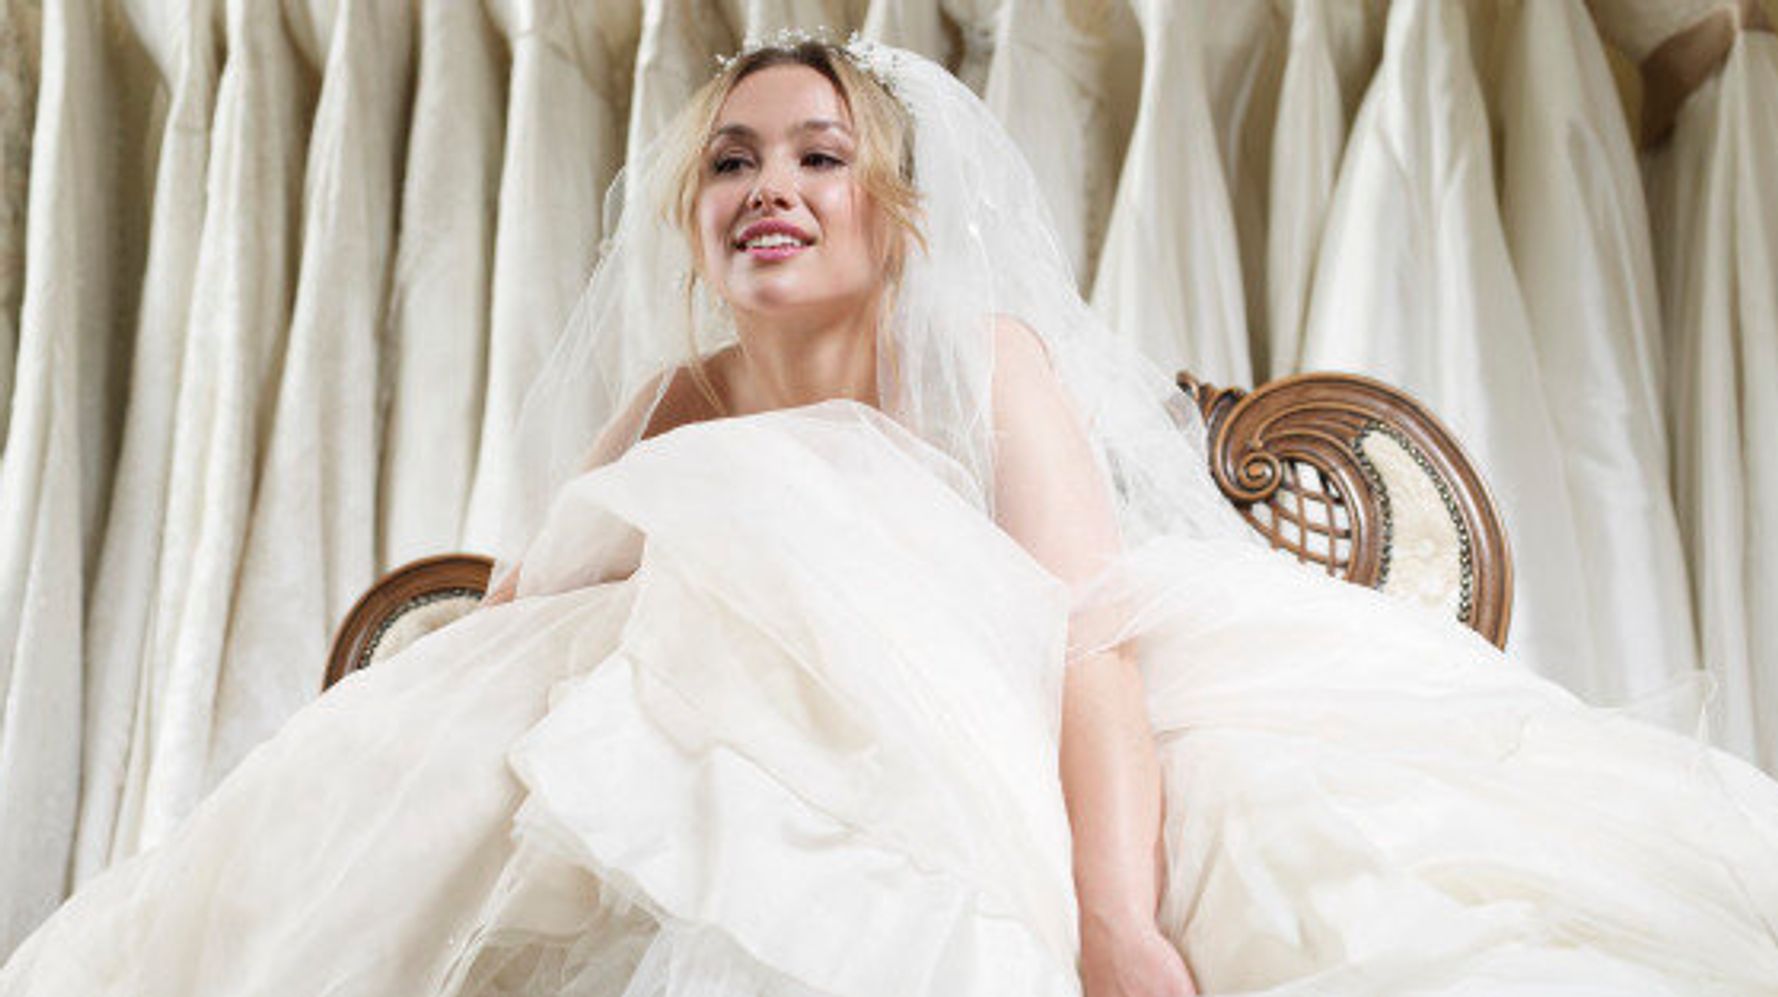 Missy Plus Size Satin Bridal Gown